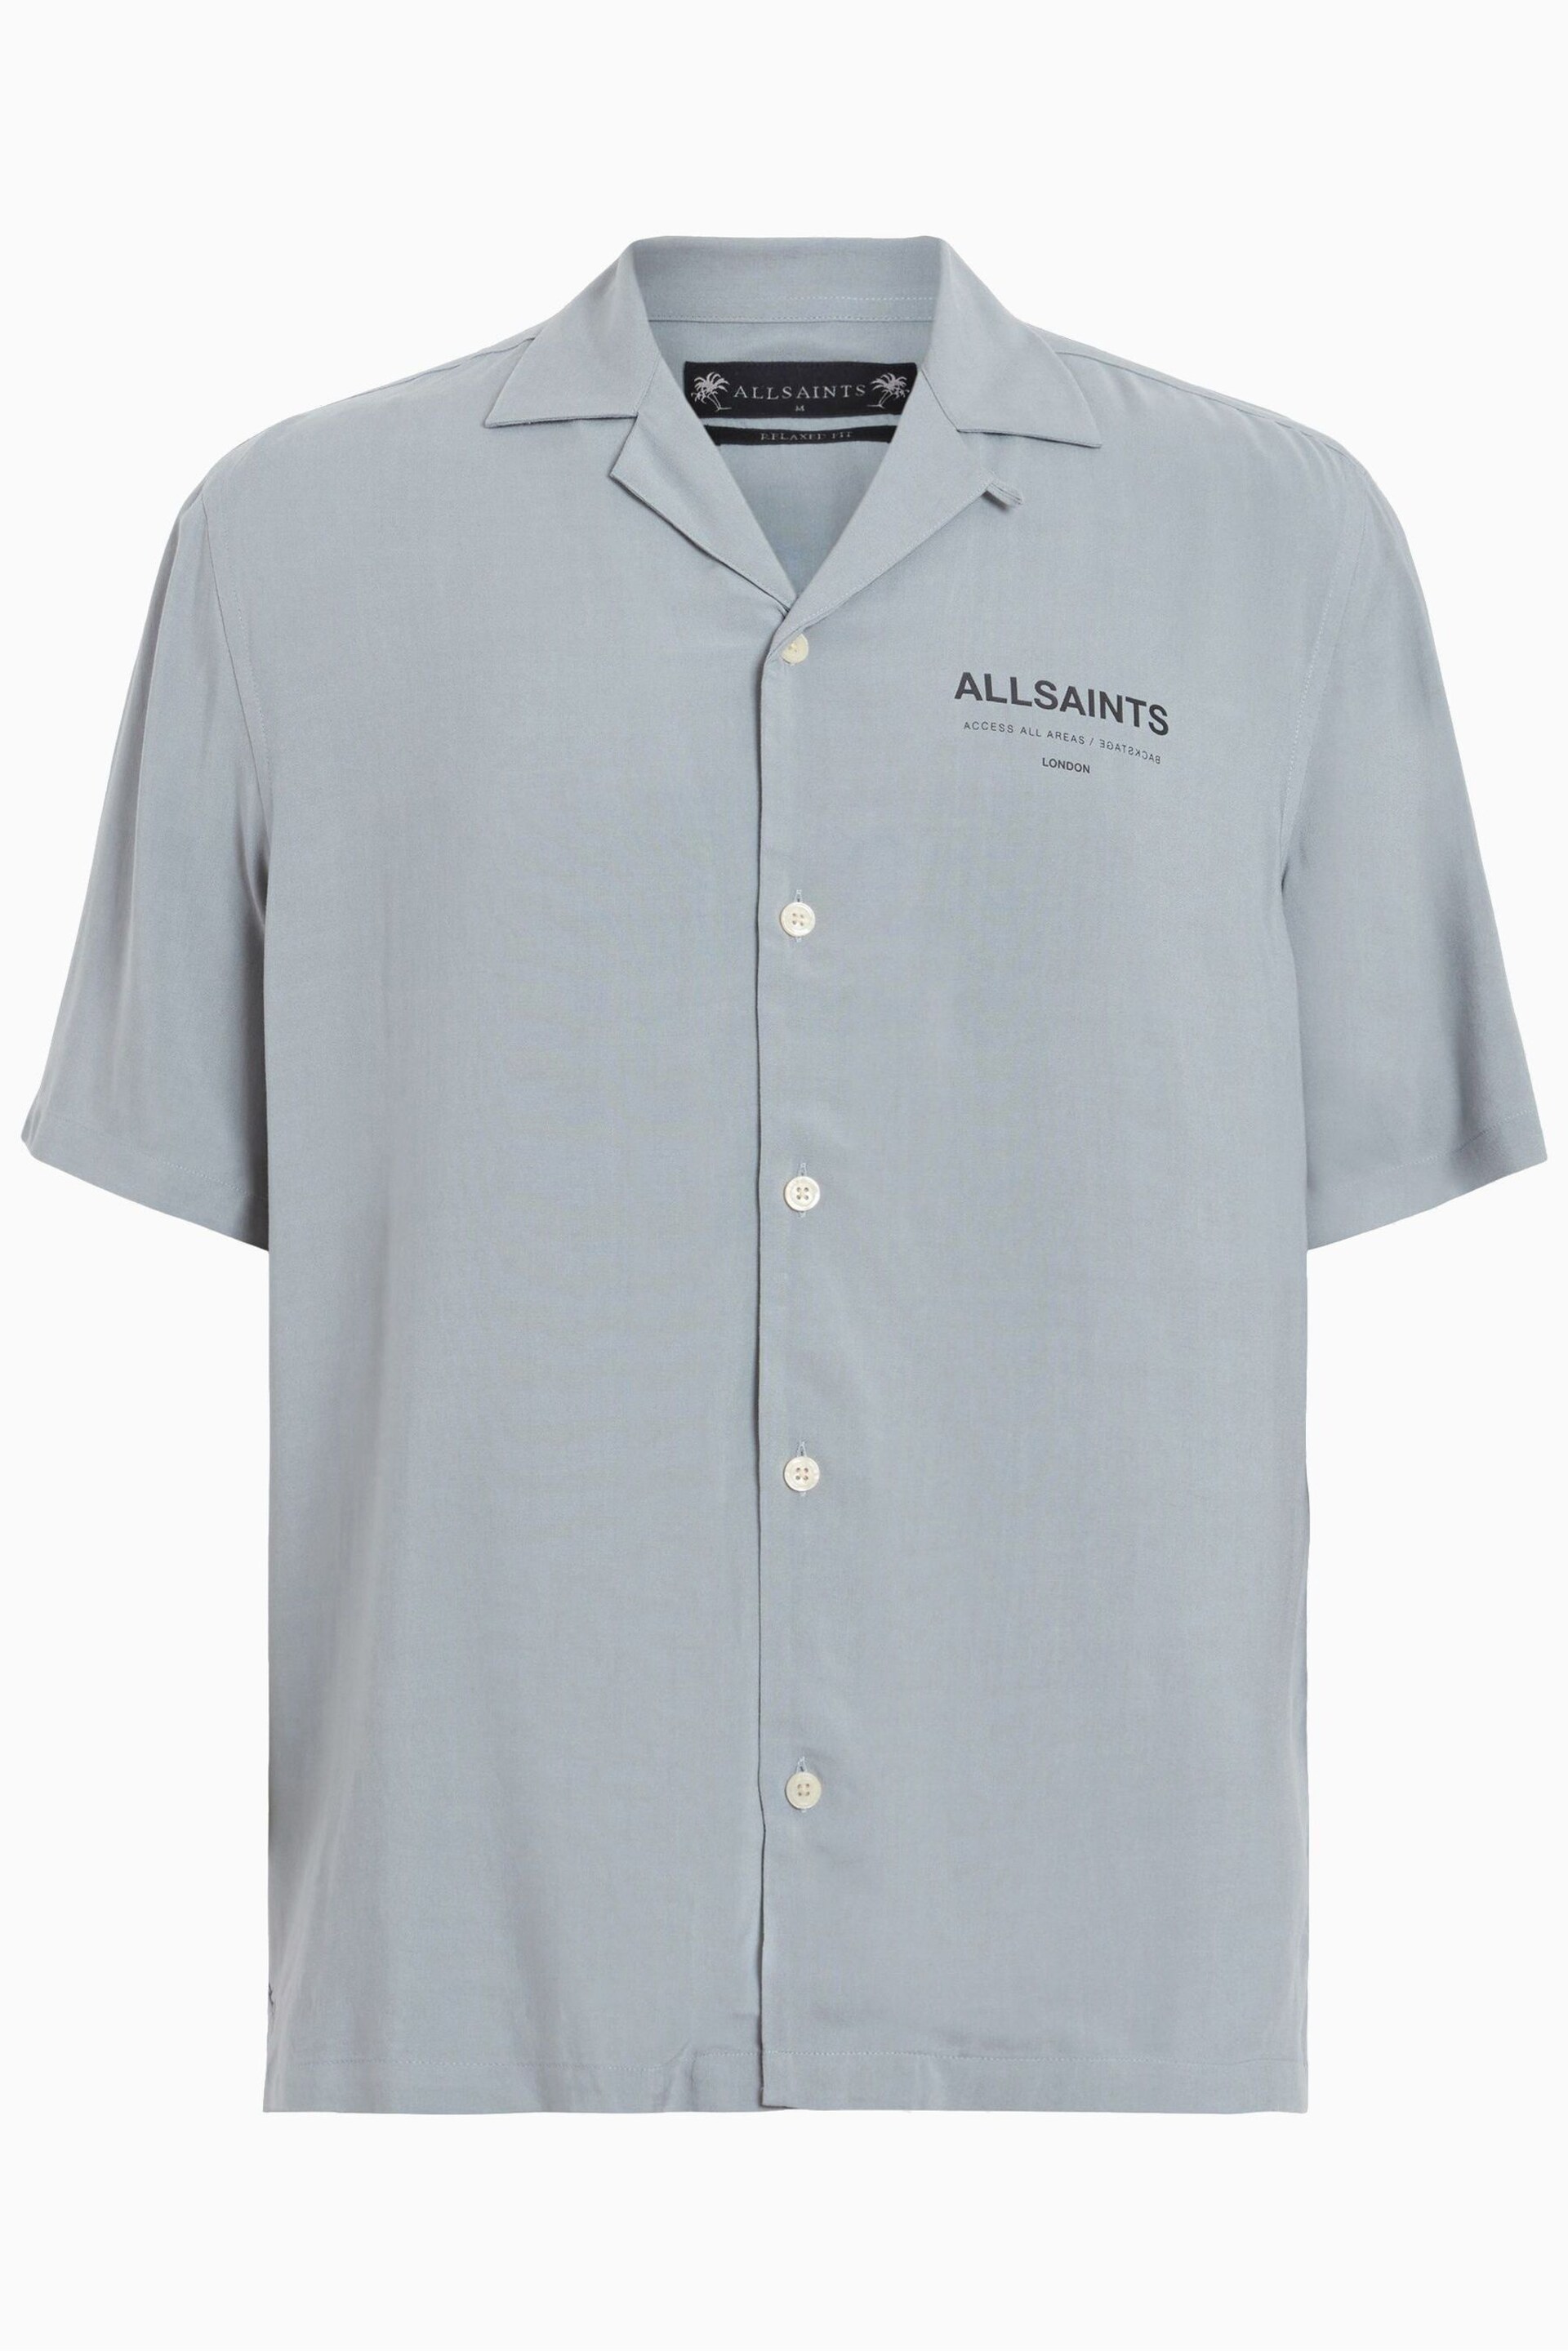 AllSaints Grey Access Shortsleeve Shirt - Image 7 of 7